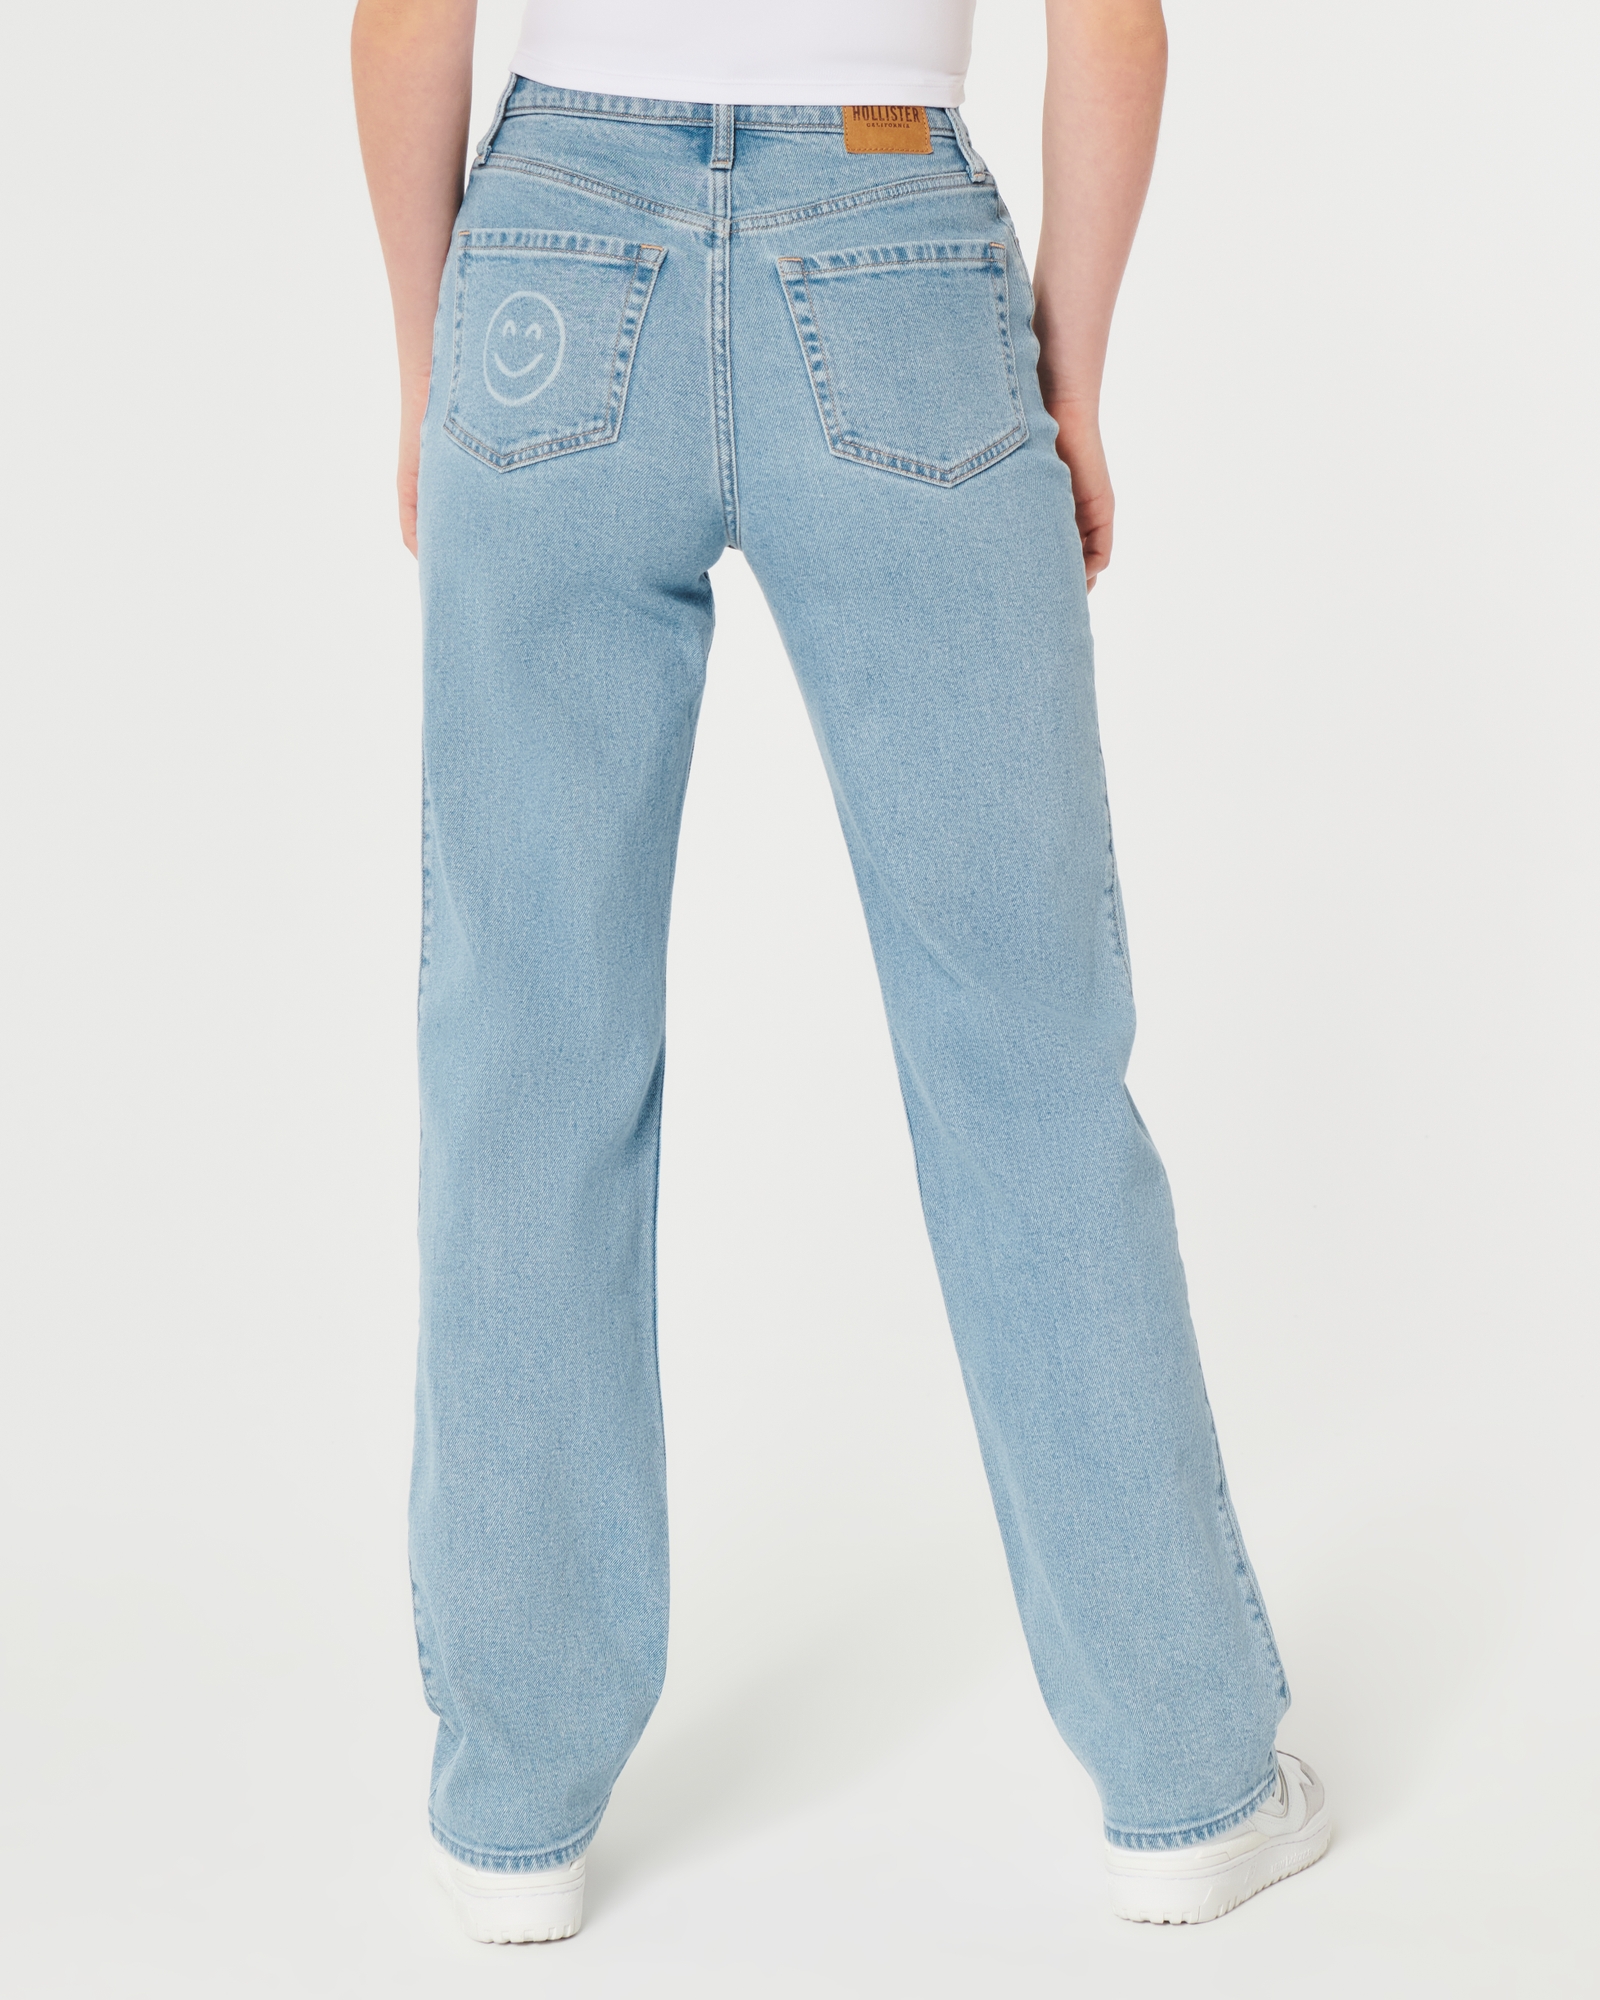 Hollister Jeans Womens 7R 7 Regular 28x31 Blue Skinny Dark Wash